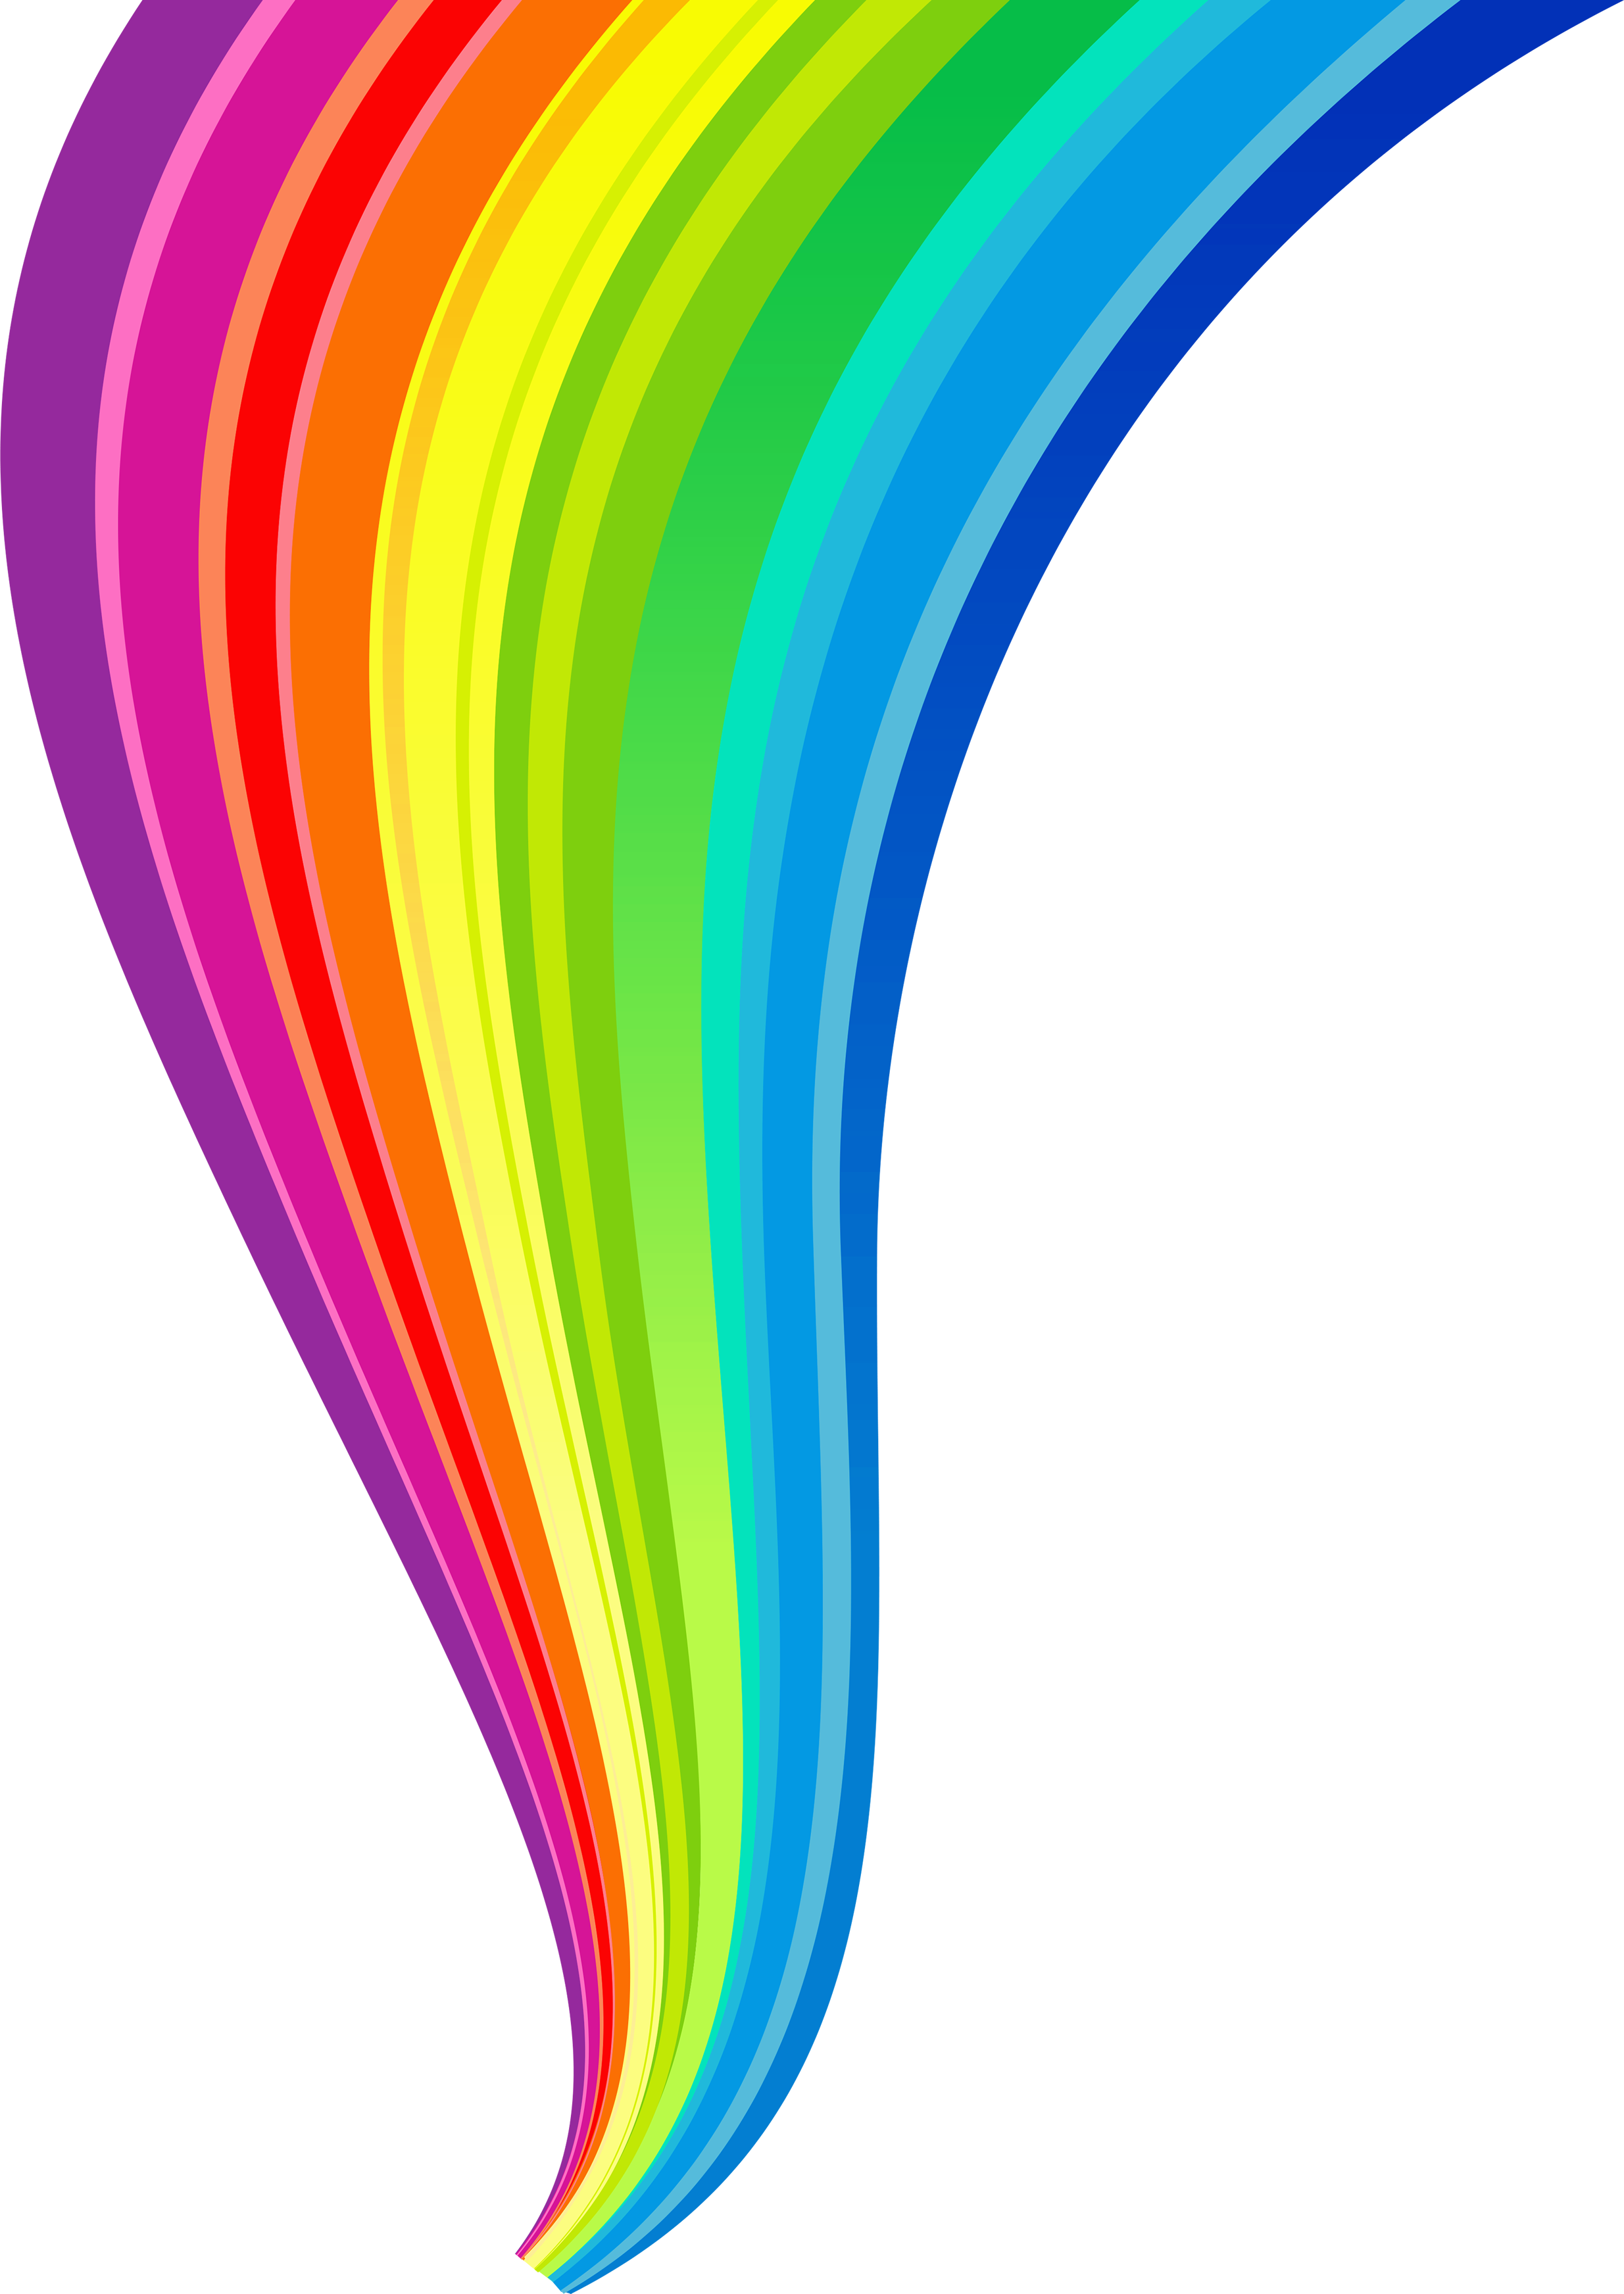 Rainbow PNG image transparent image download, size: 2469x3488px